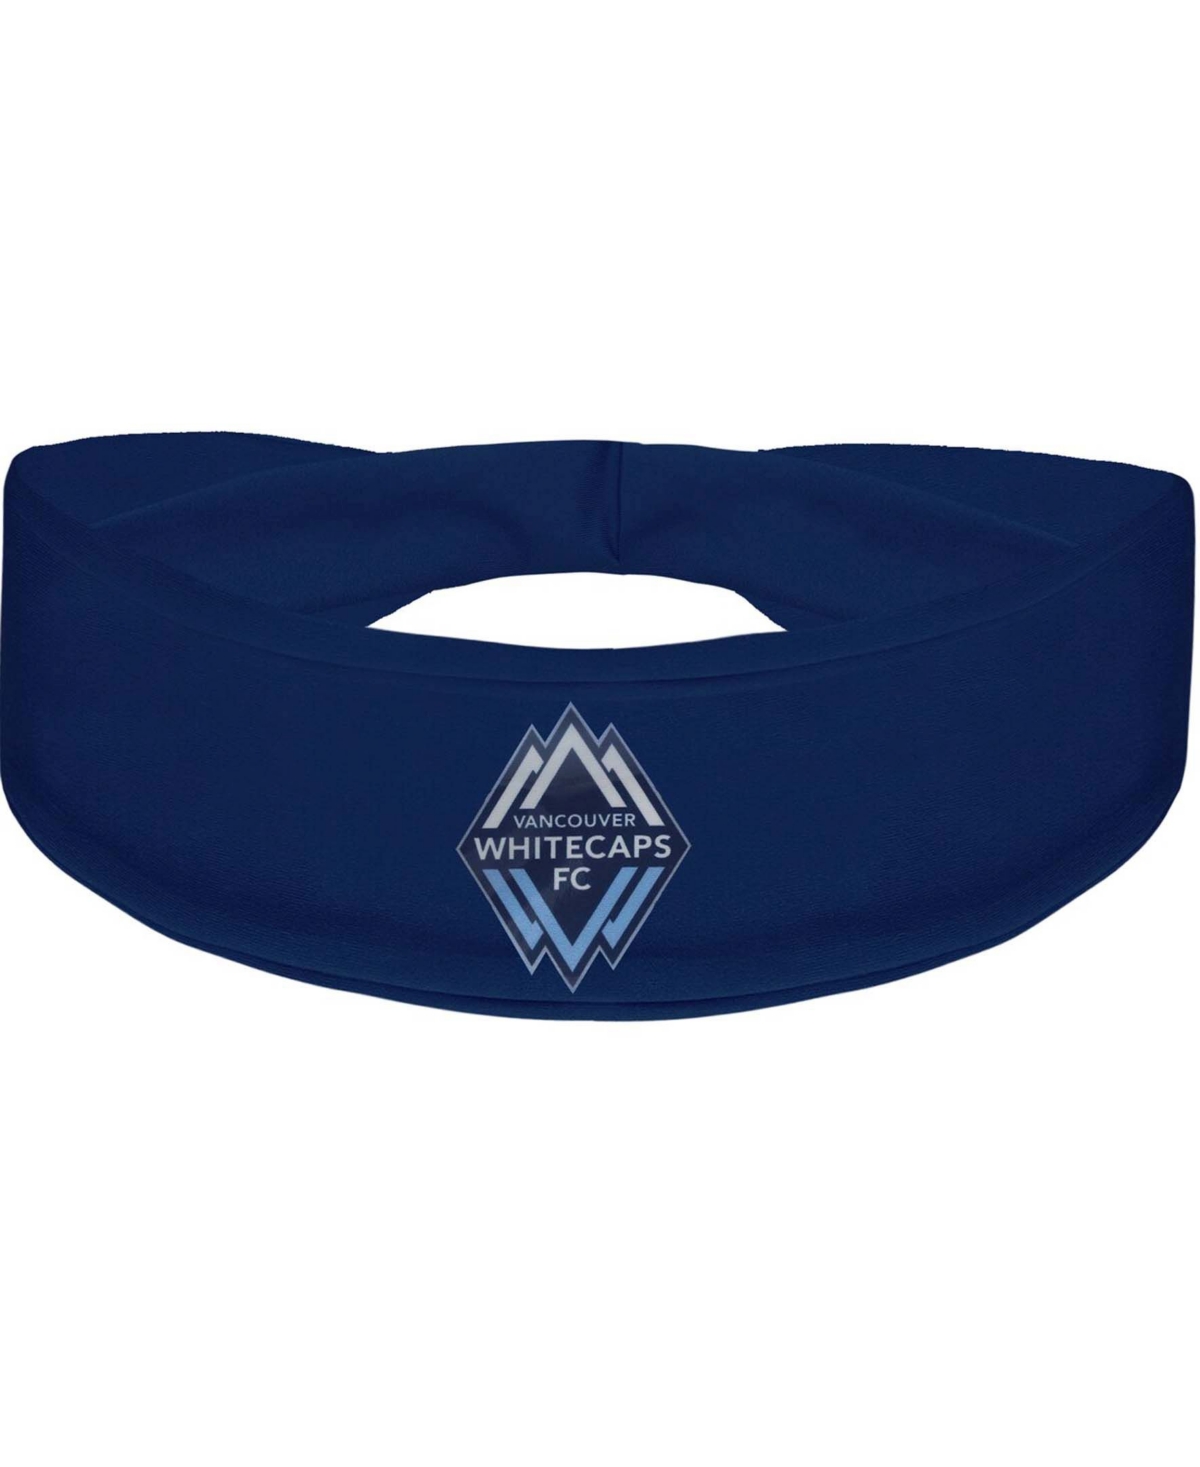 Navy Vancouver Whitecaps Fc Primary Logo Cooling Headband - Navy